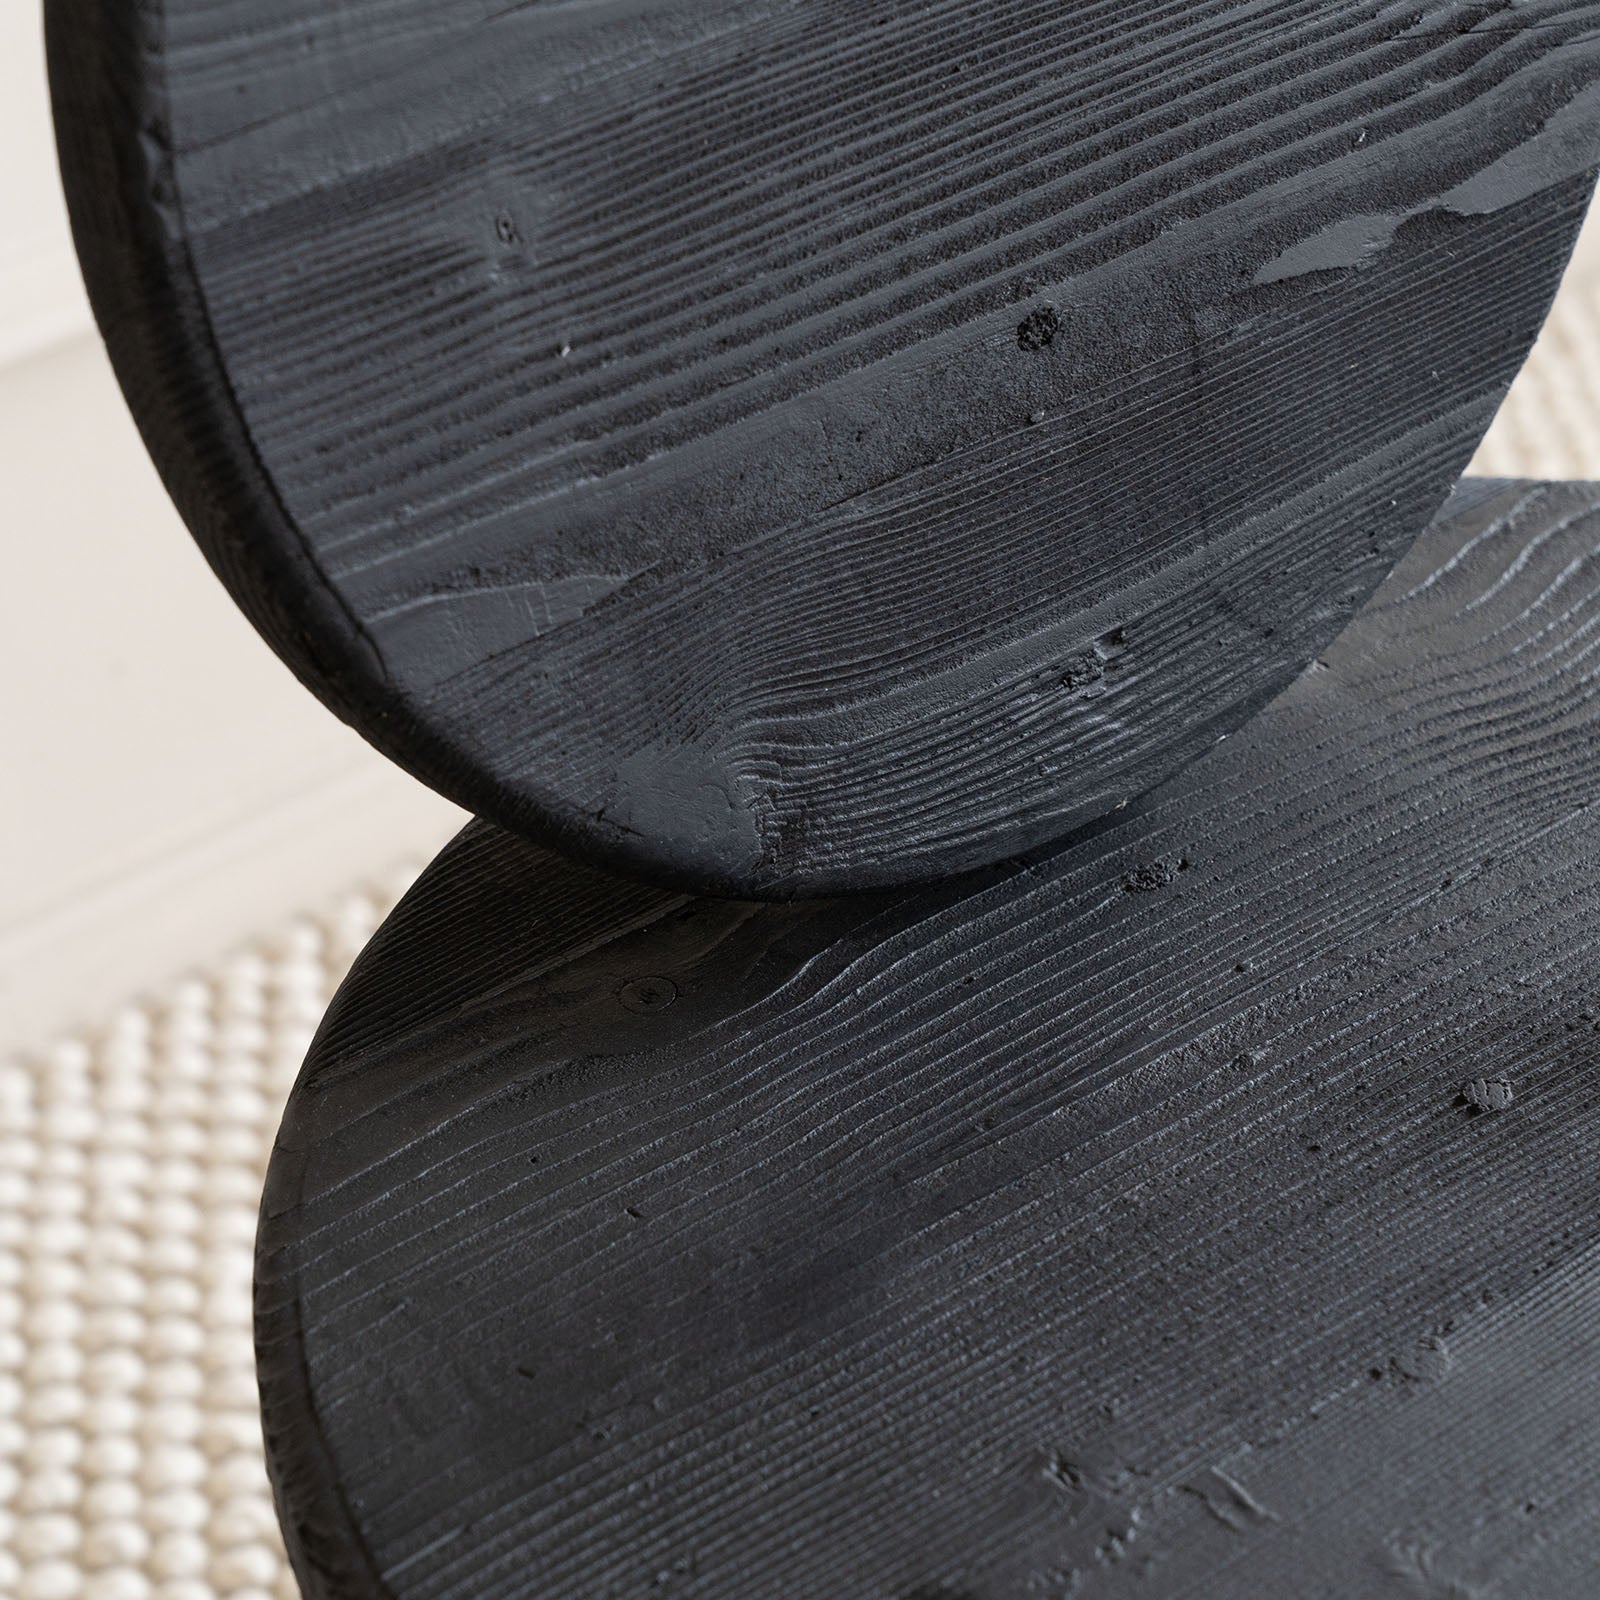 Tokyo Chair-Black - Wood and Steel Furnitures